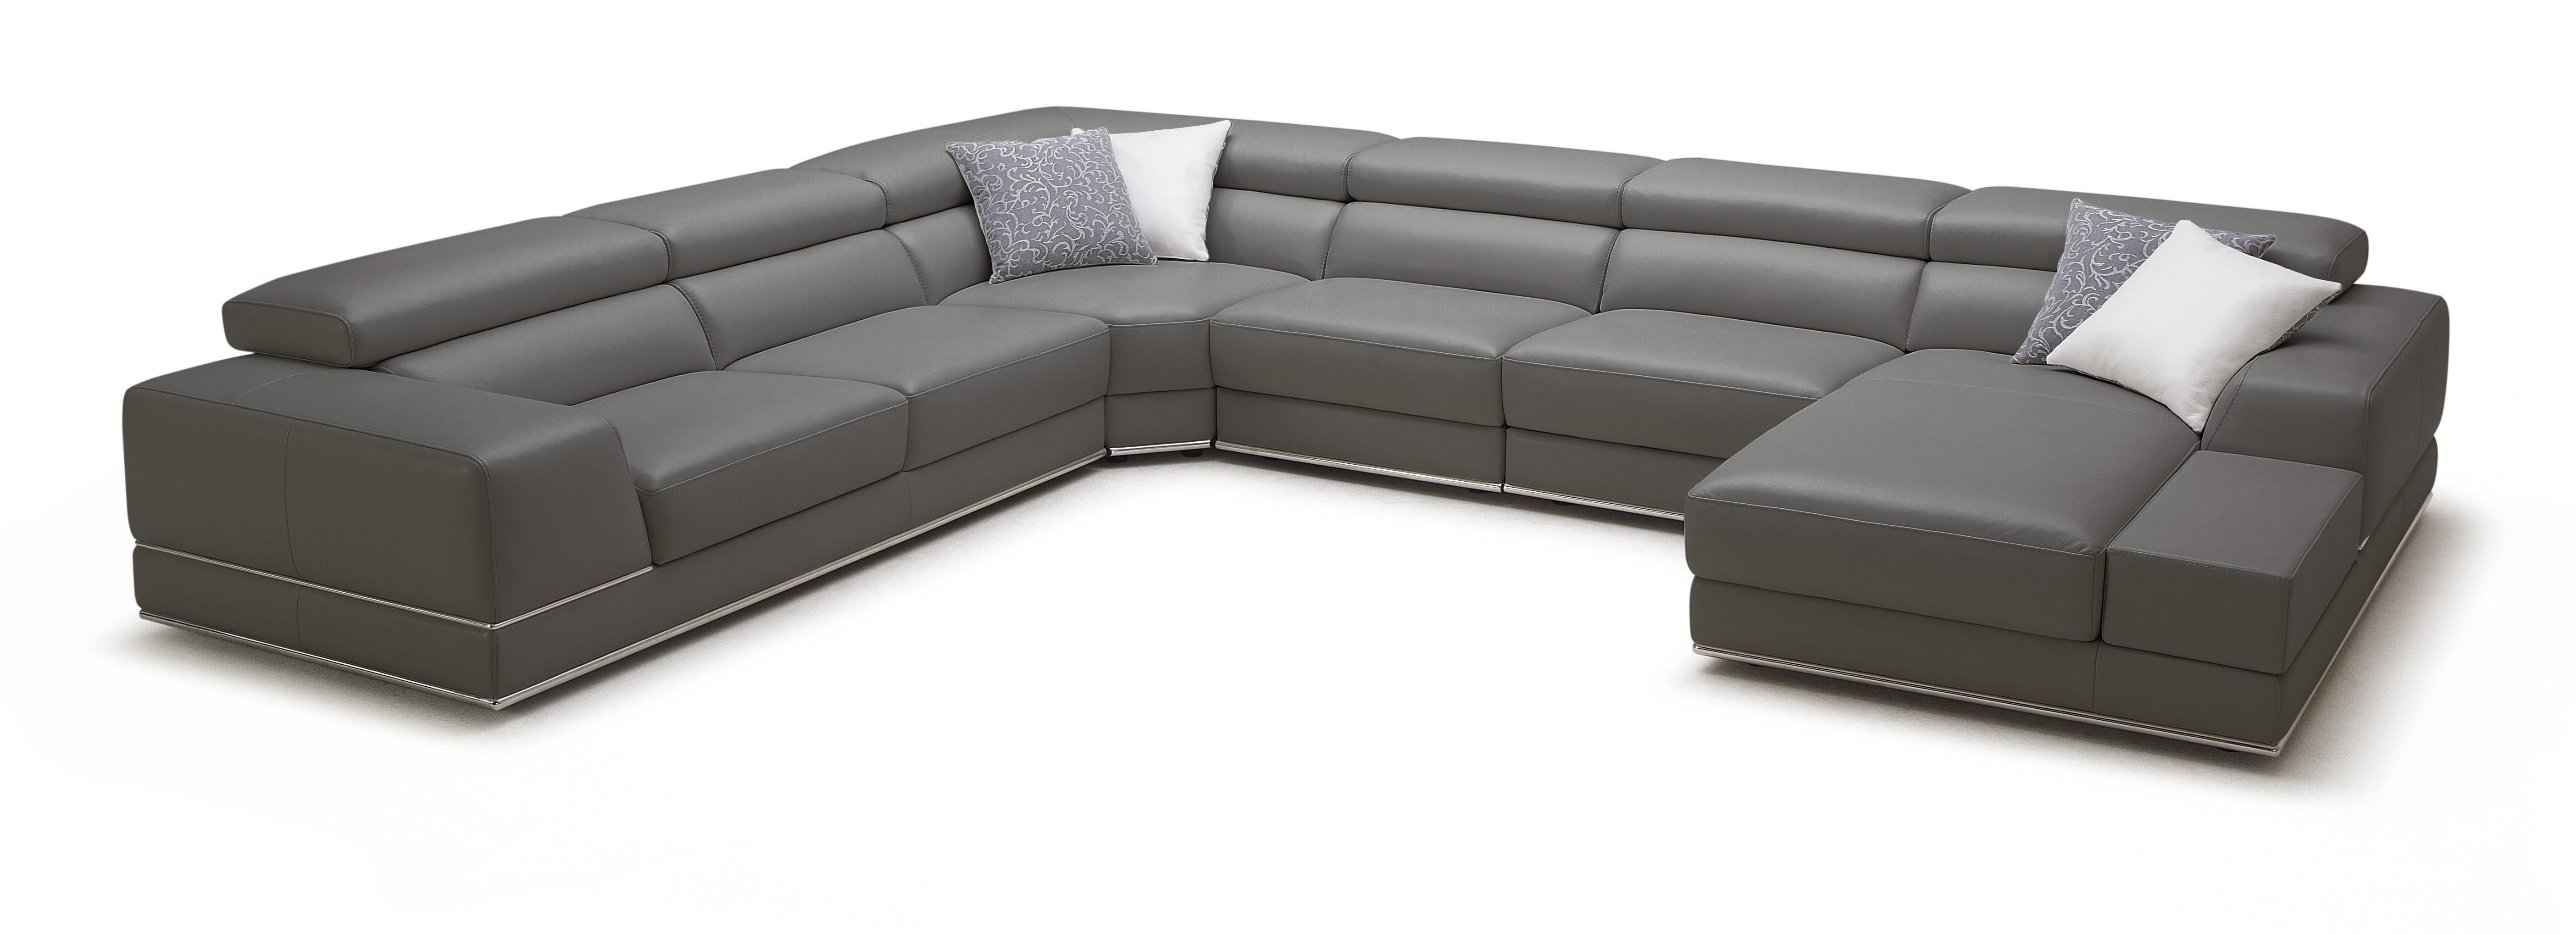 bergamo 3 seater leather modern sofa light gray